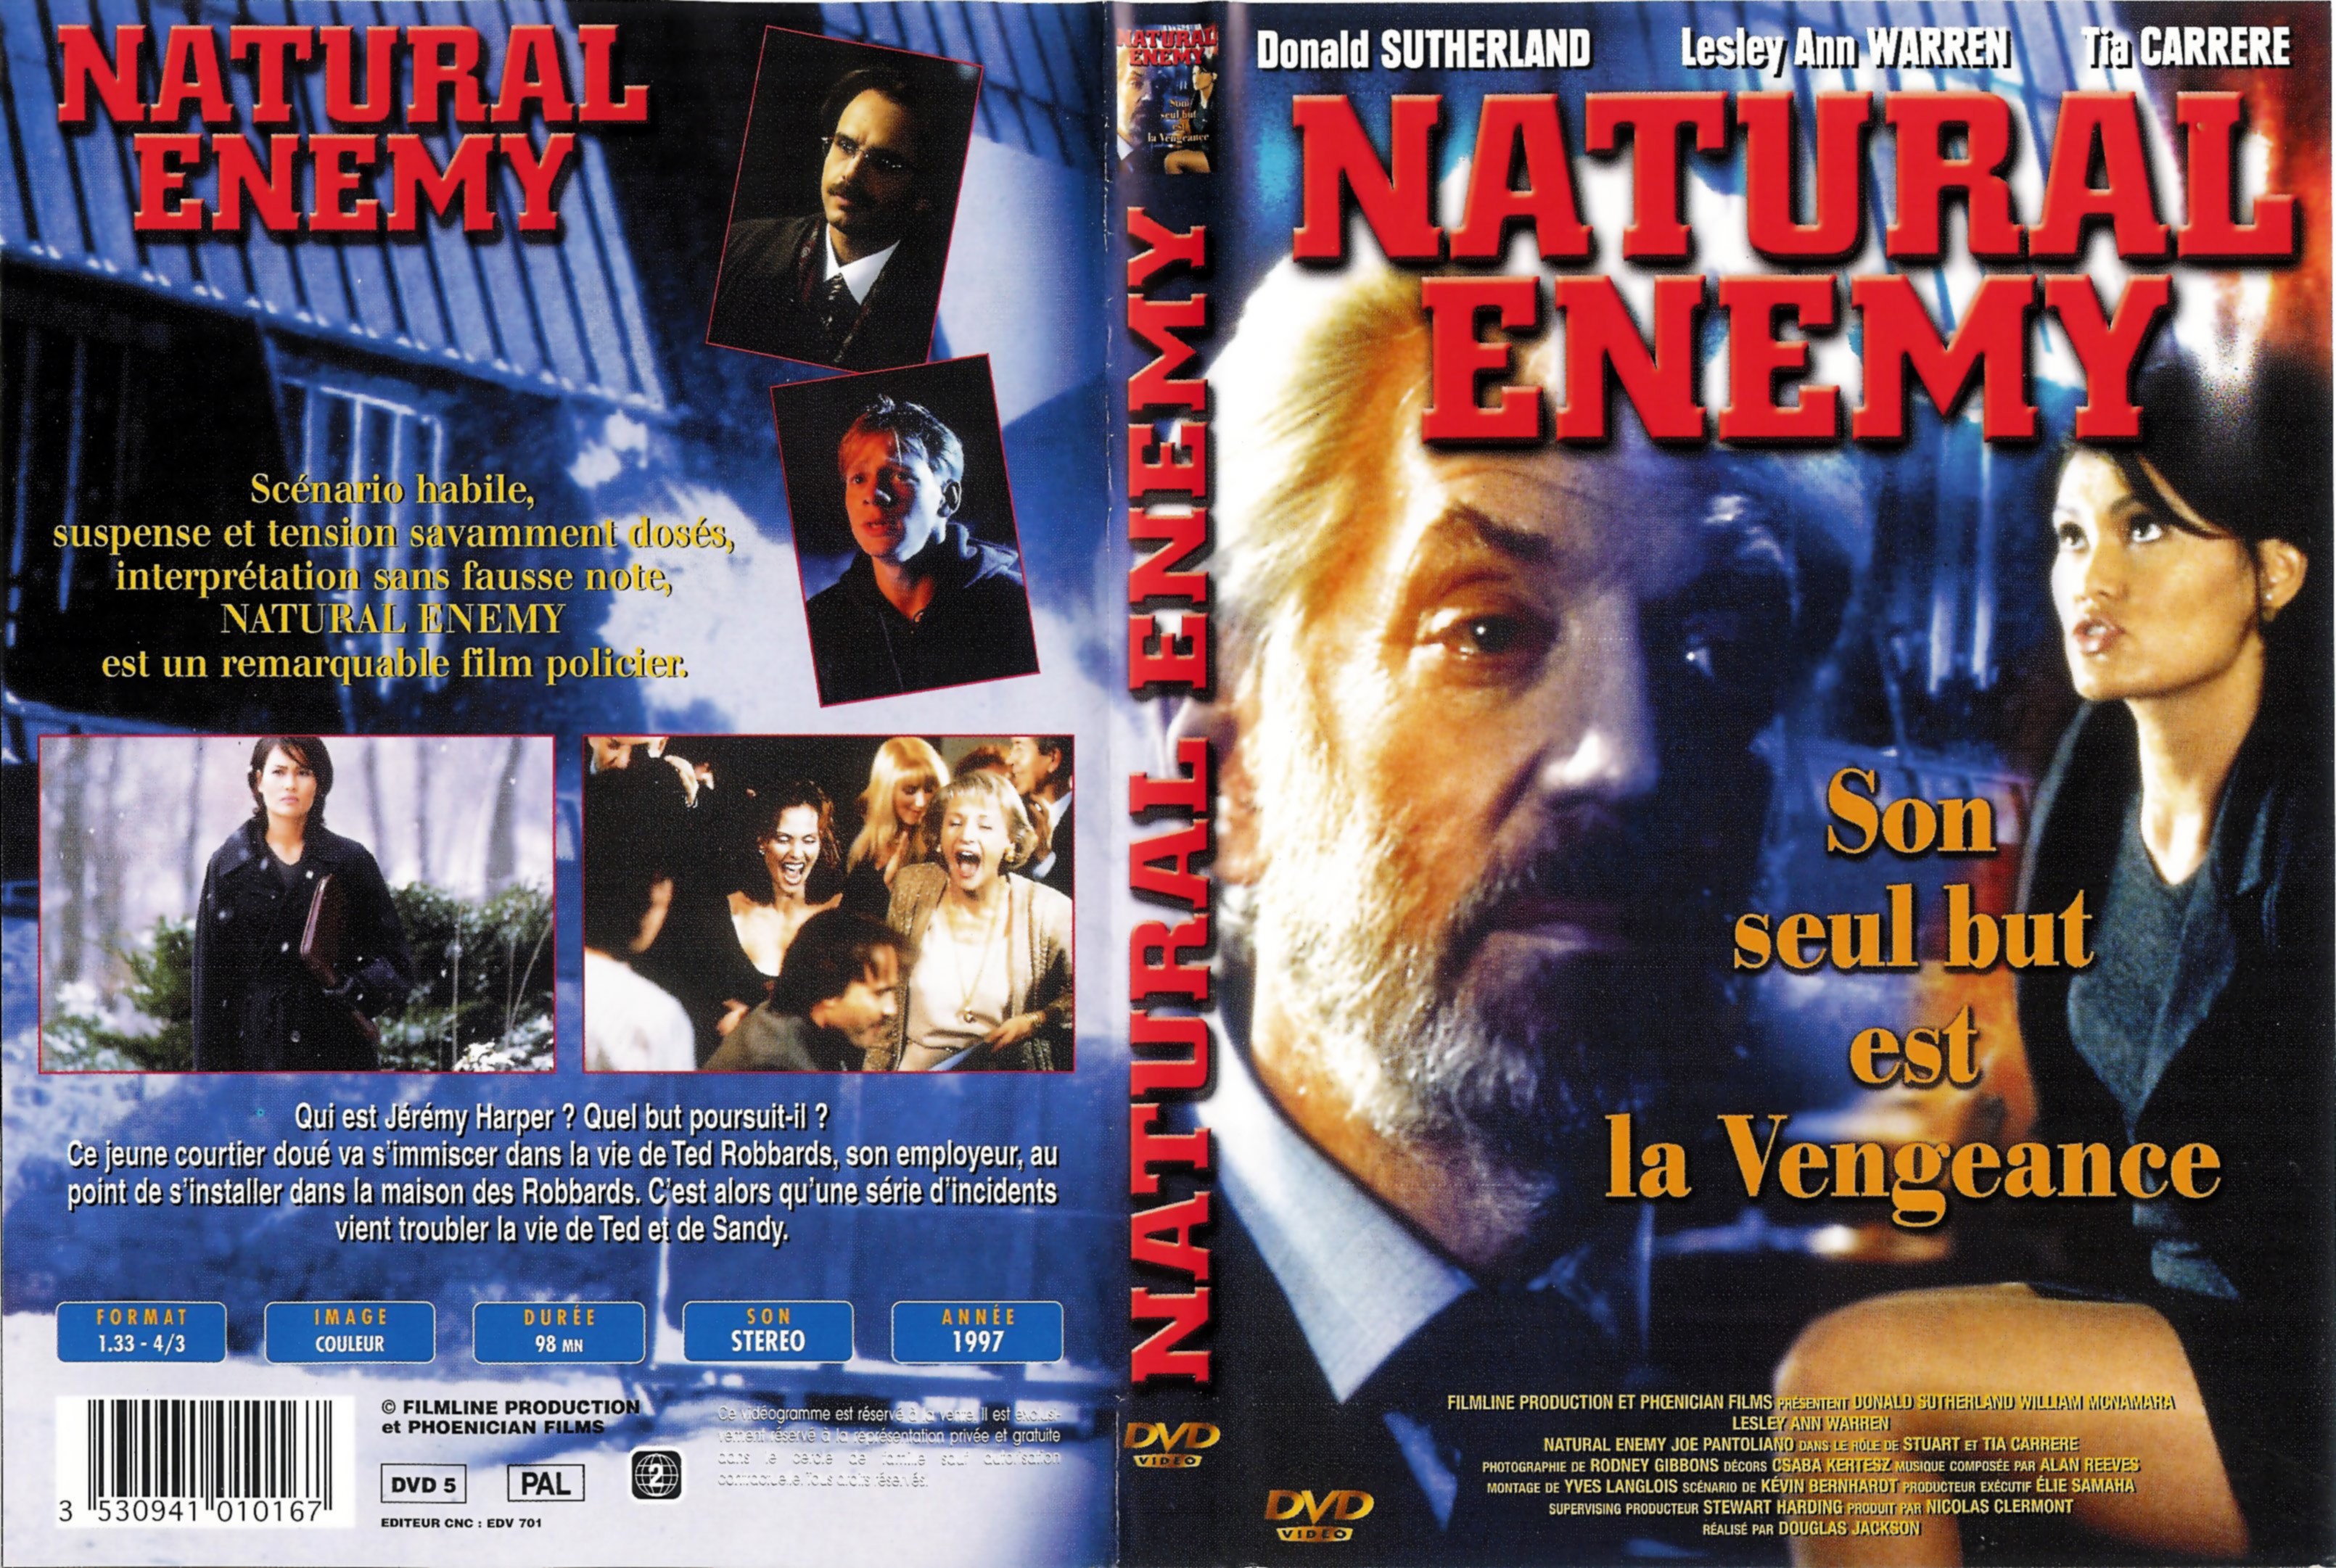 Jaquette DVD Natural enemy